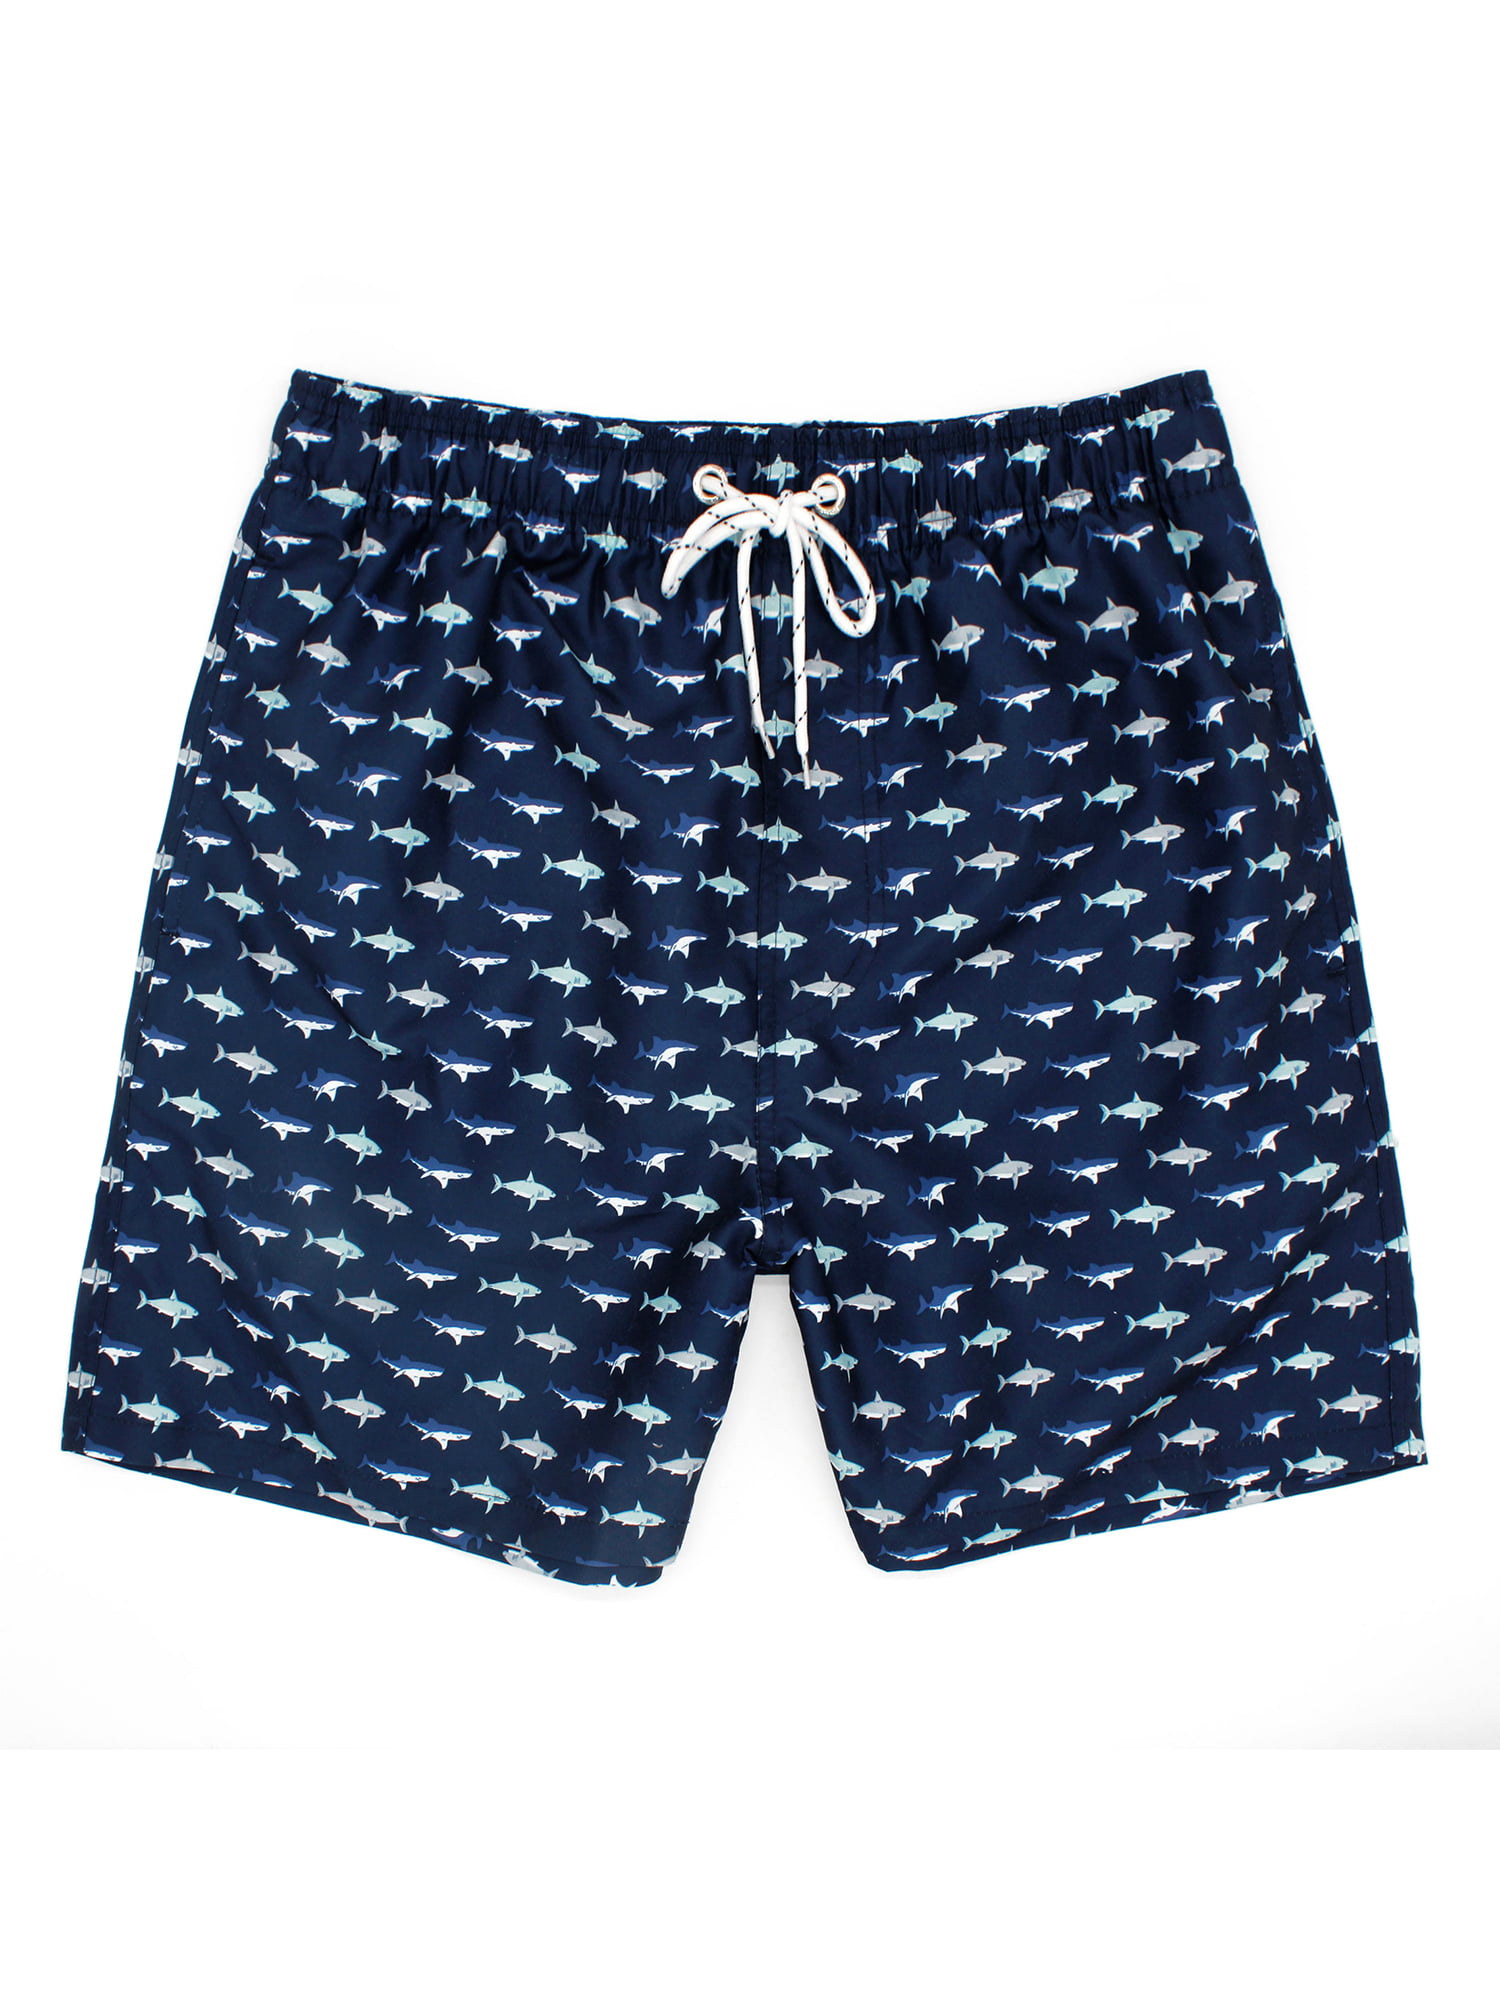 Blue, by Yinsoouli Mens Short Swim Trunks Quick Dry Boy Mens Board Shorts Watershort Pant for Beach Sunbathing 